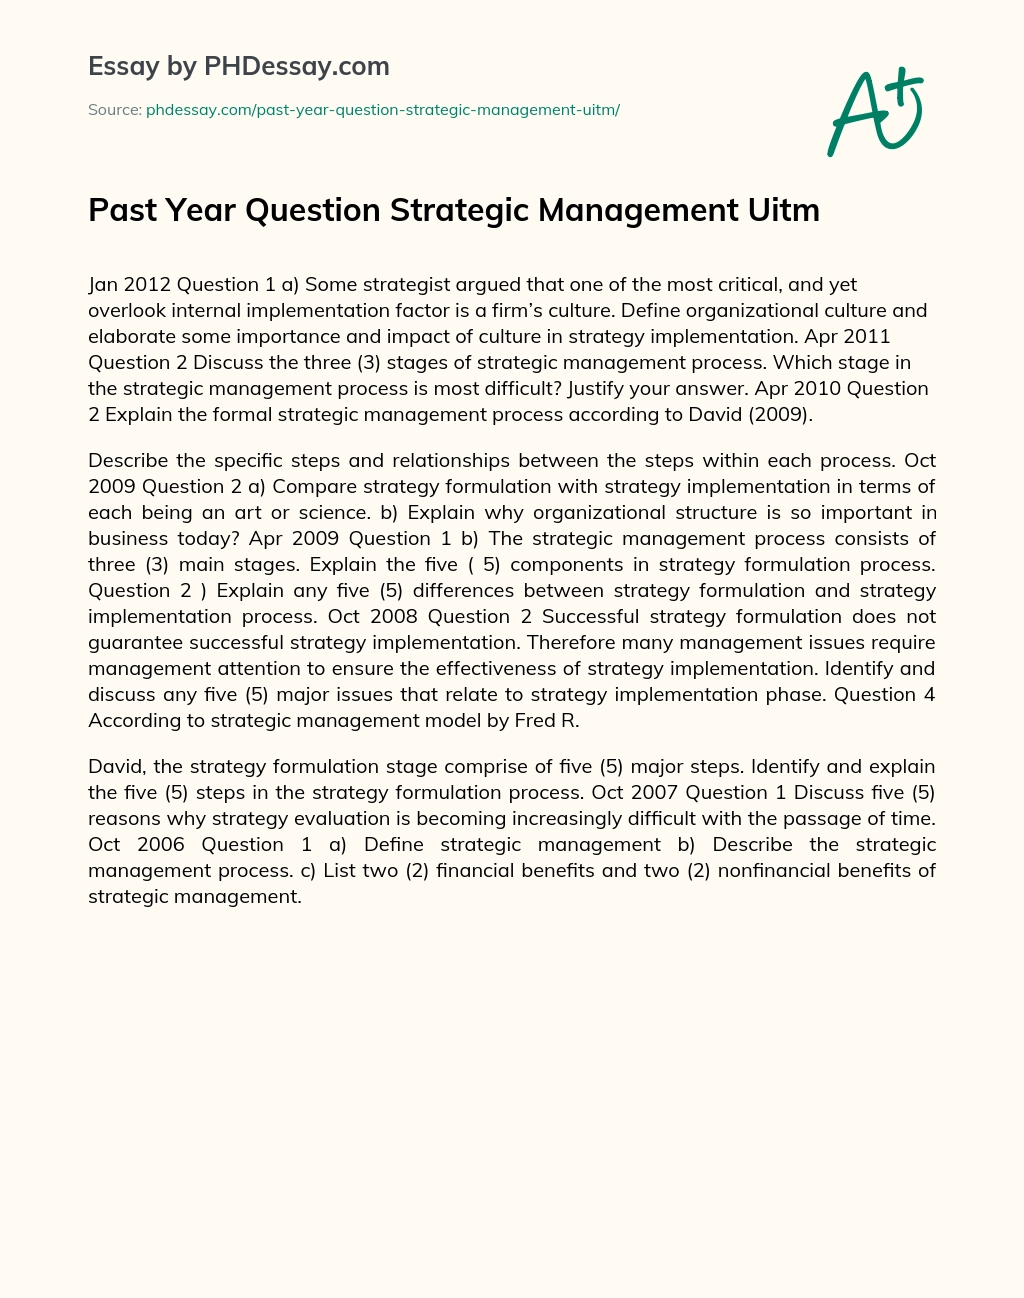 Past Year Question Strategic Management Uitm essay